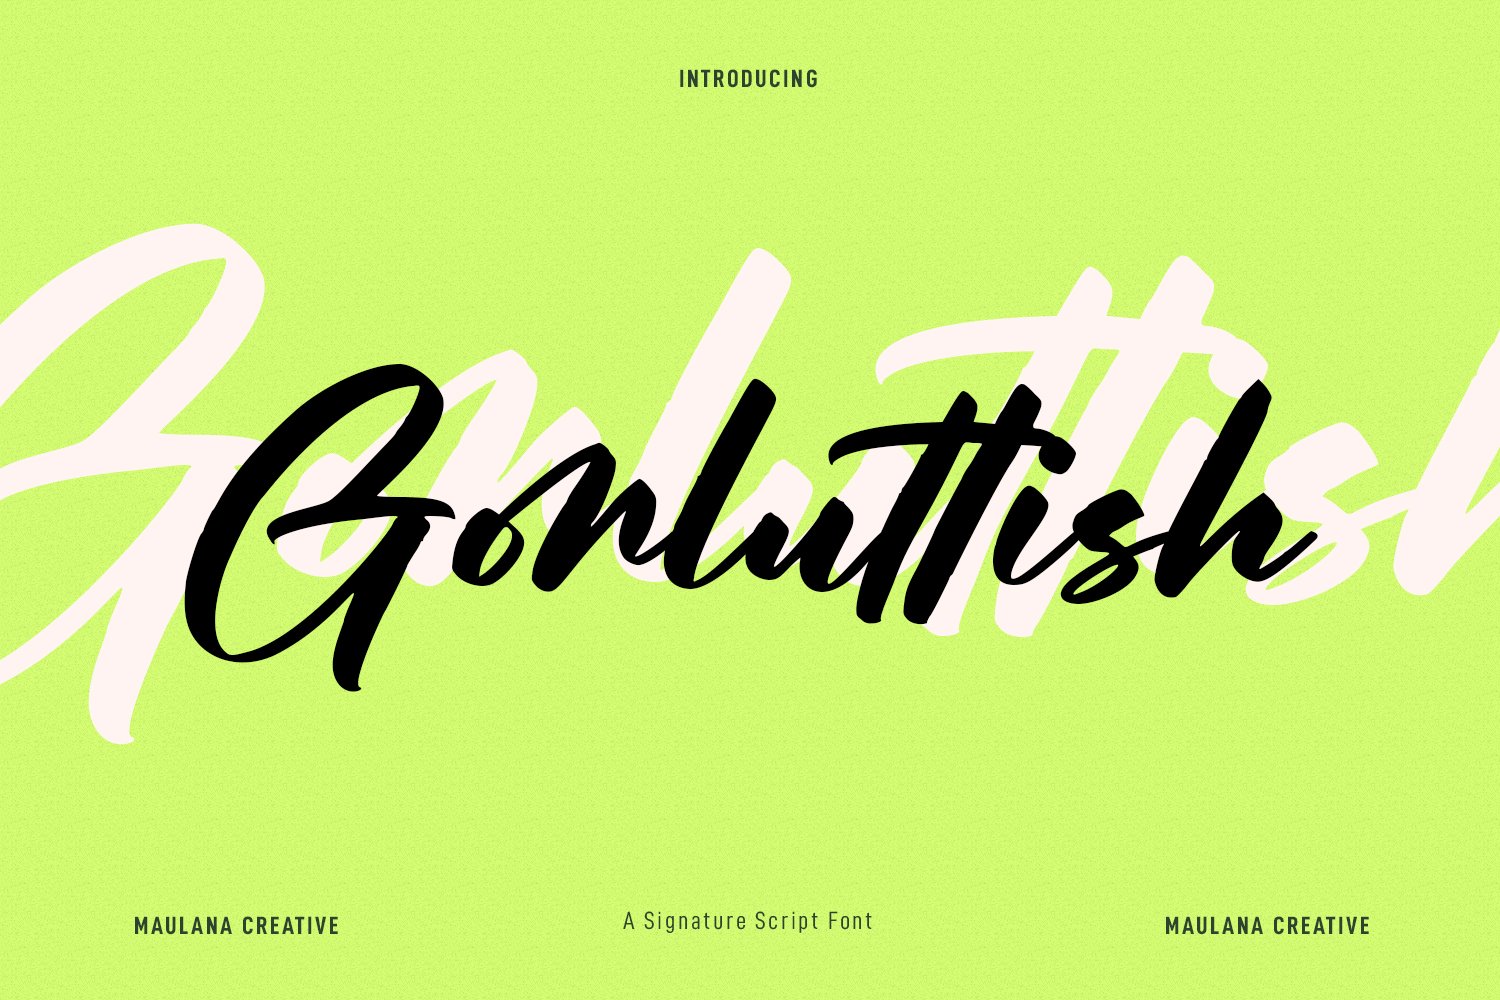 Gorluttish Script Font cover image.